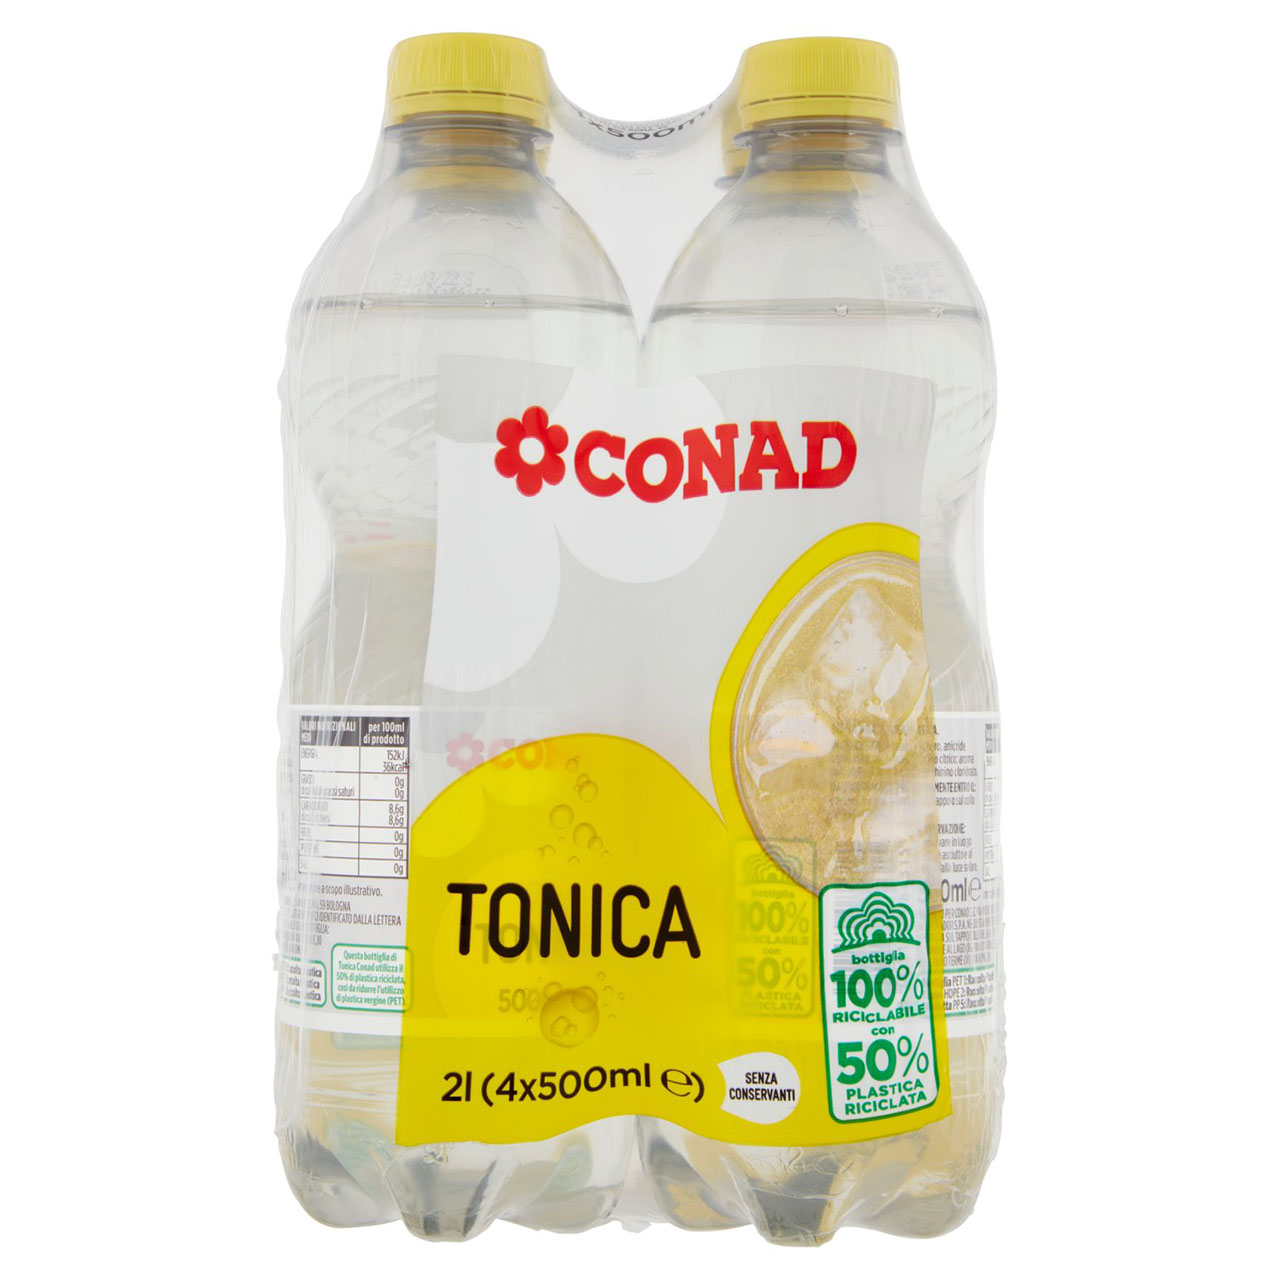 Tonica 4 x 500 ml Conad in vendita online